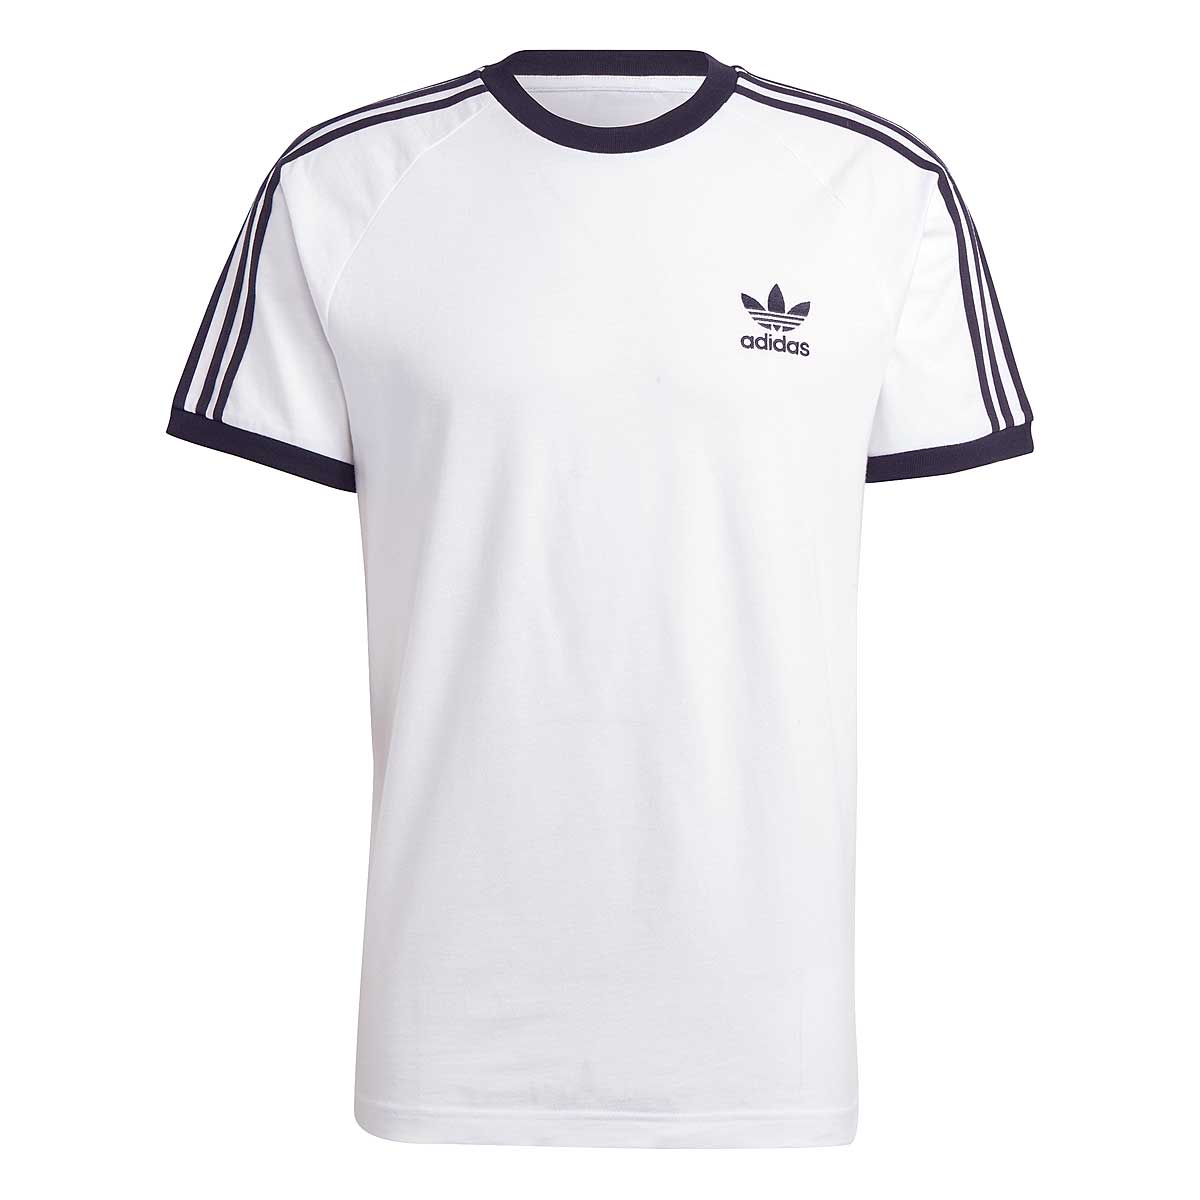 Image of Adidas Adicolor Classics 3-stripes T-shirt, White/black